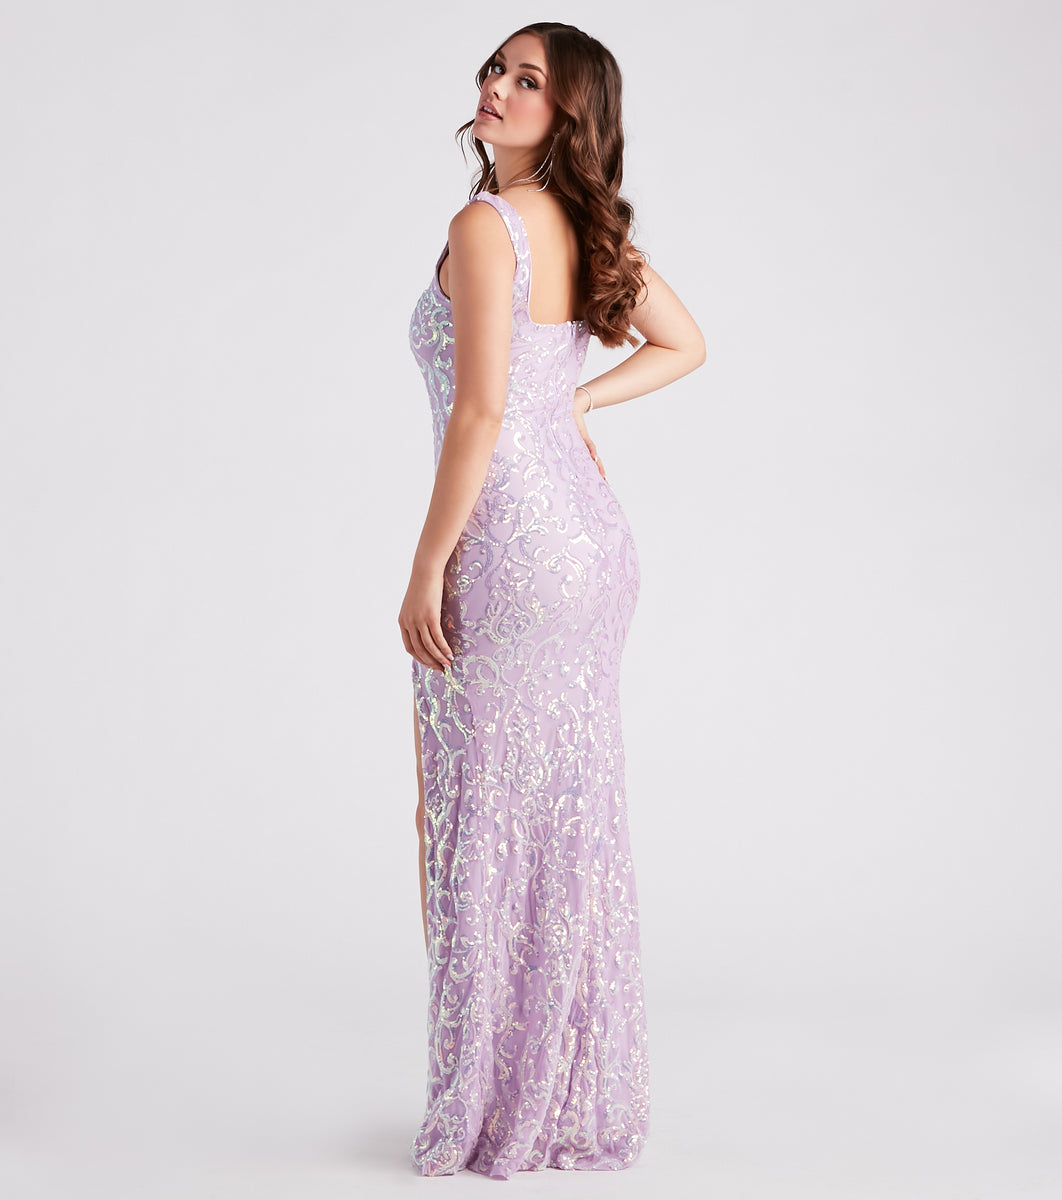 Jovie Formal Sequin Slit Mermaid Long Dress